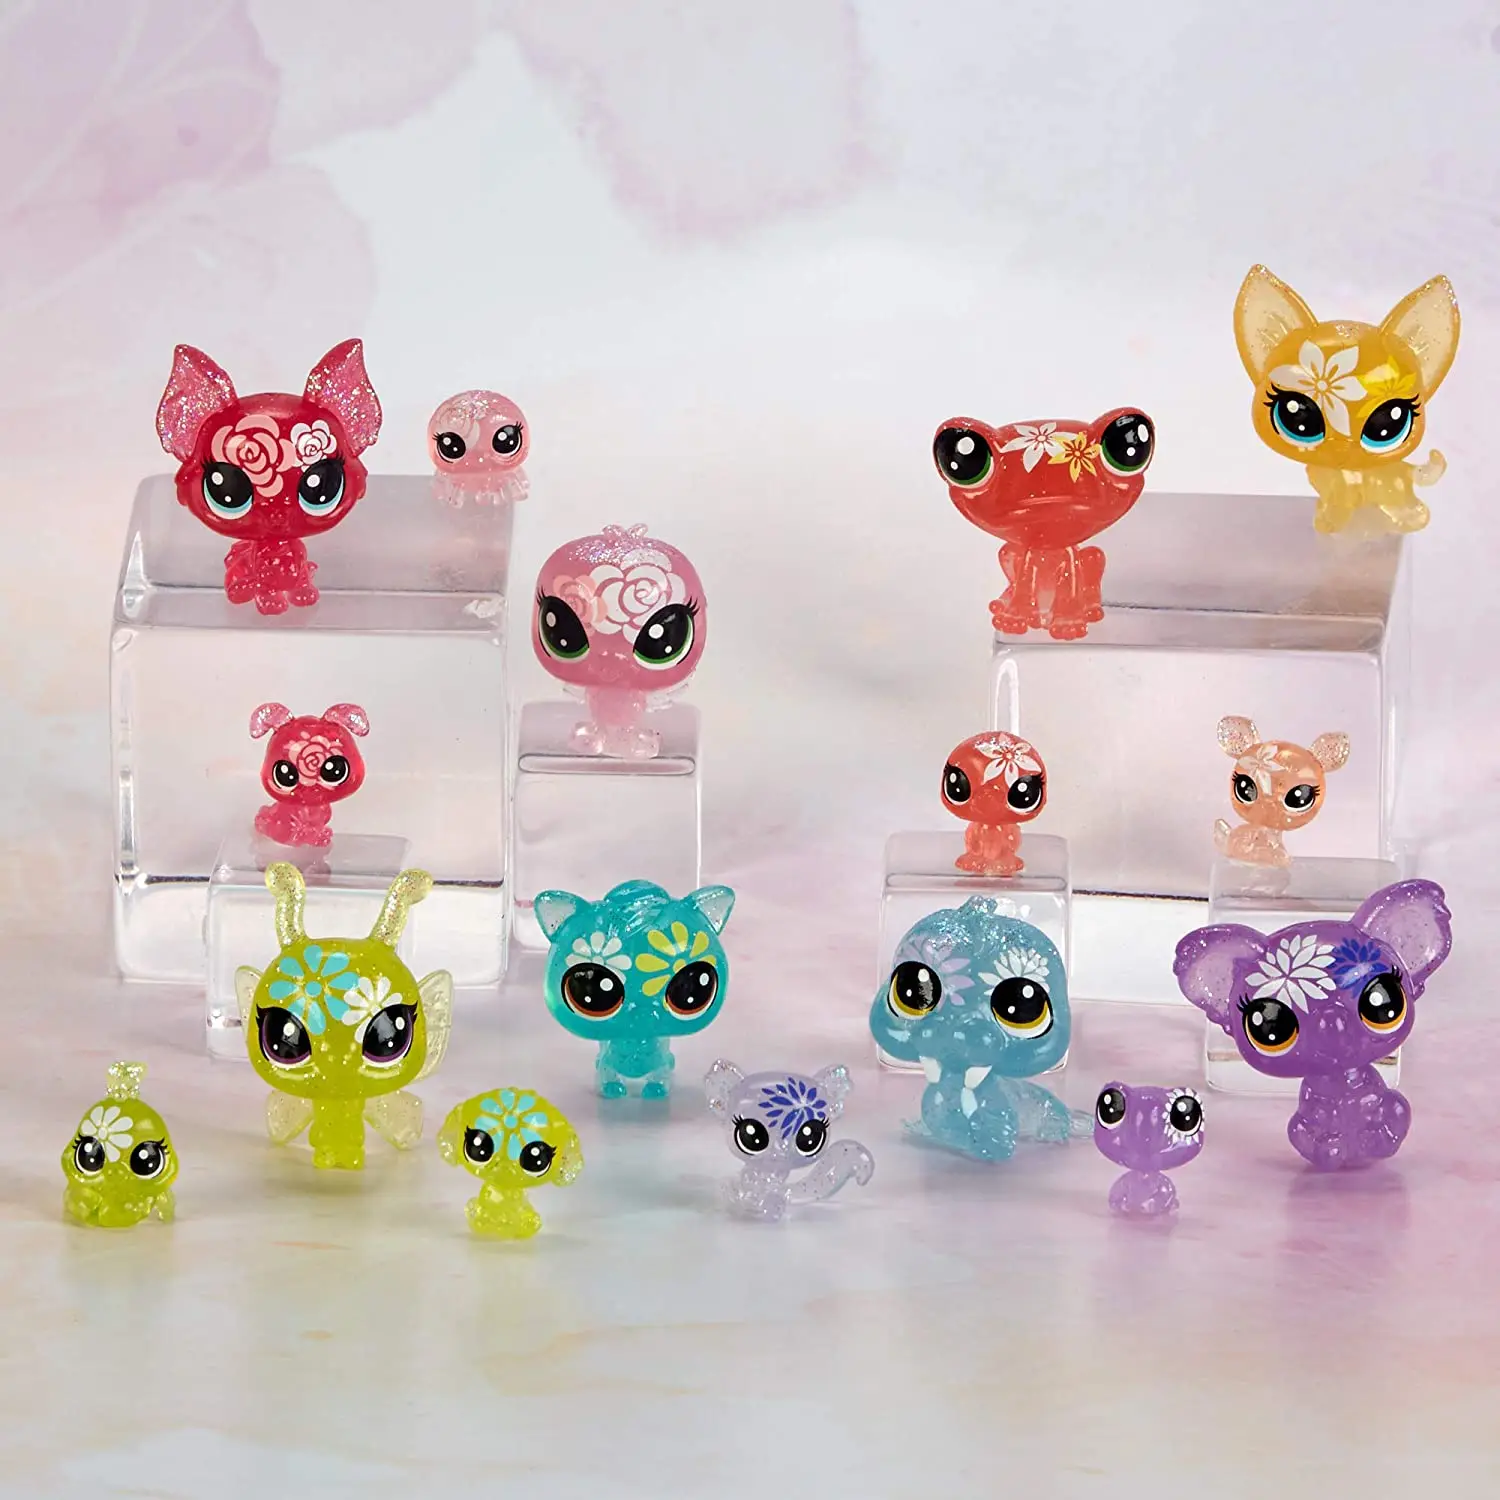 https://ae01.alicdn.com/kf/Sdf5452d5522b435b89d79da69b104ef4K/Original-Littlest-Pet-Shop-With-Box-Genuine-LPS-Toys-Animal-Cute-Figure-Mini-Doll-Action-Figure.jpg